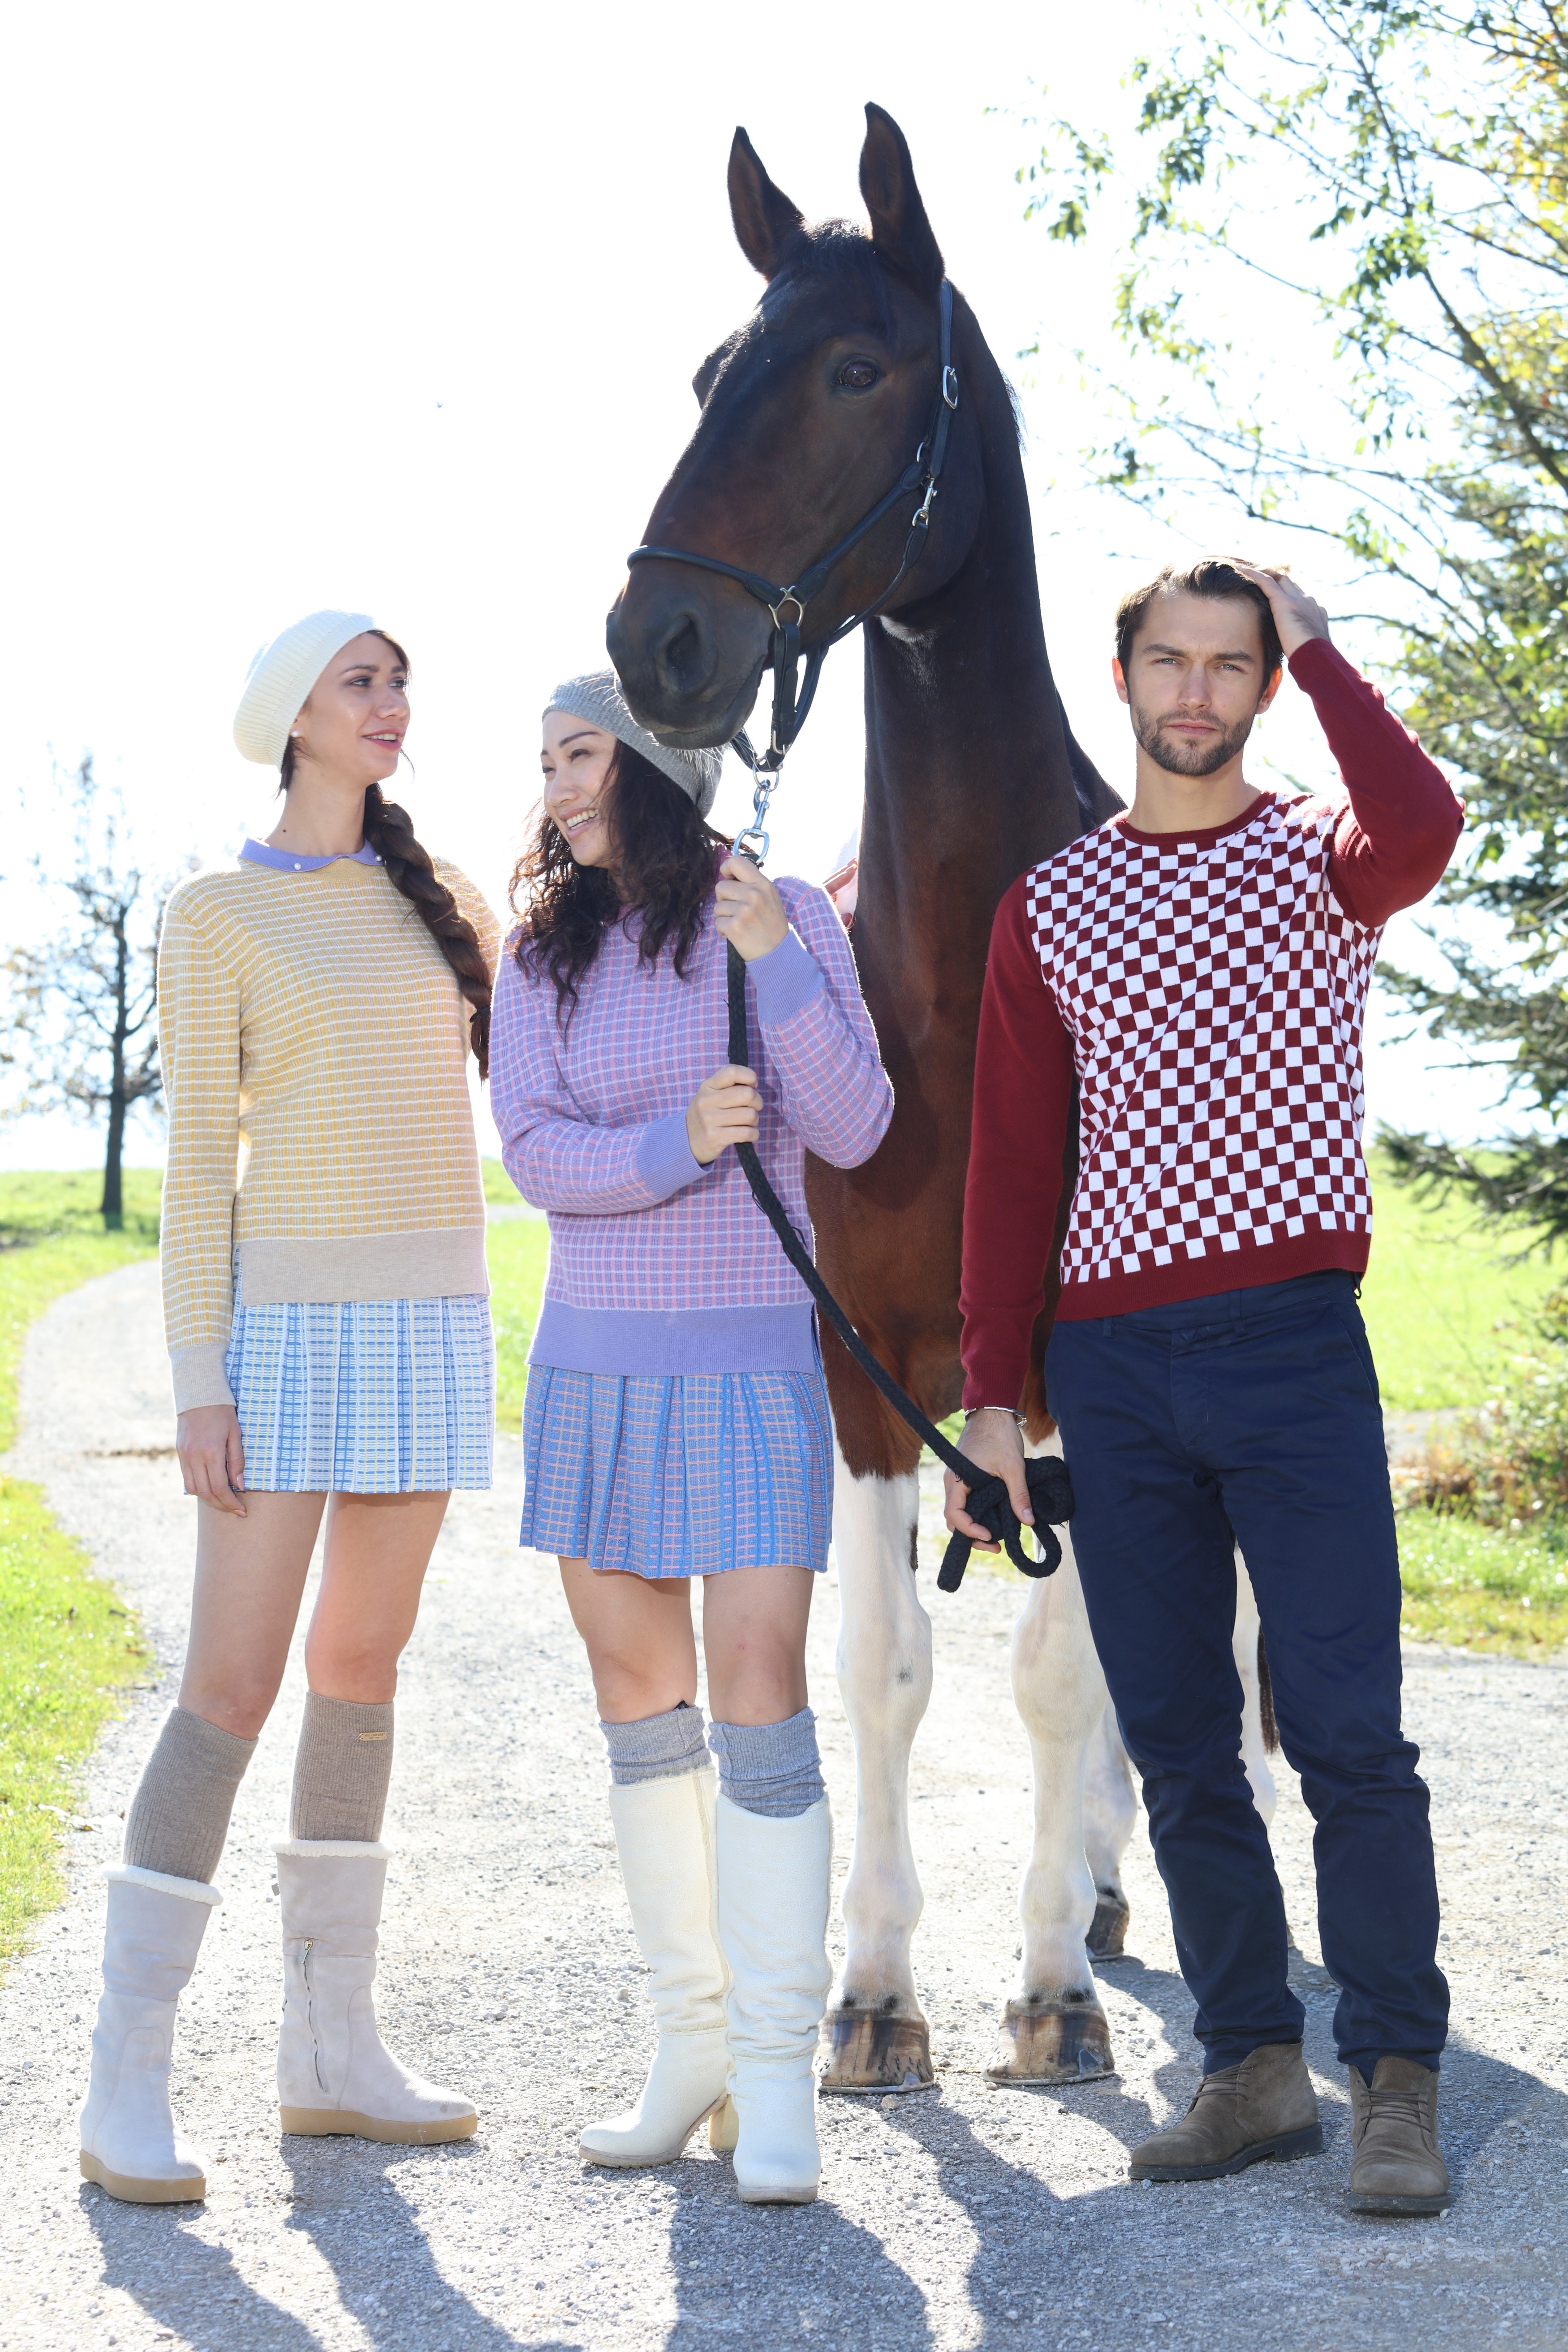 Merino Wool Cashmere | Winter Checkered Sweater | Checkered Long Sleeve | Bellemere New York